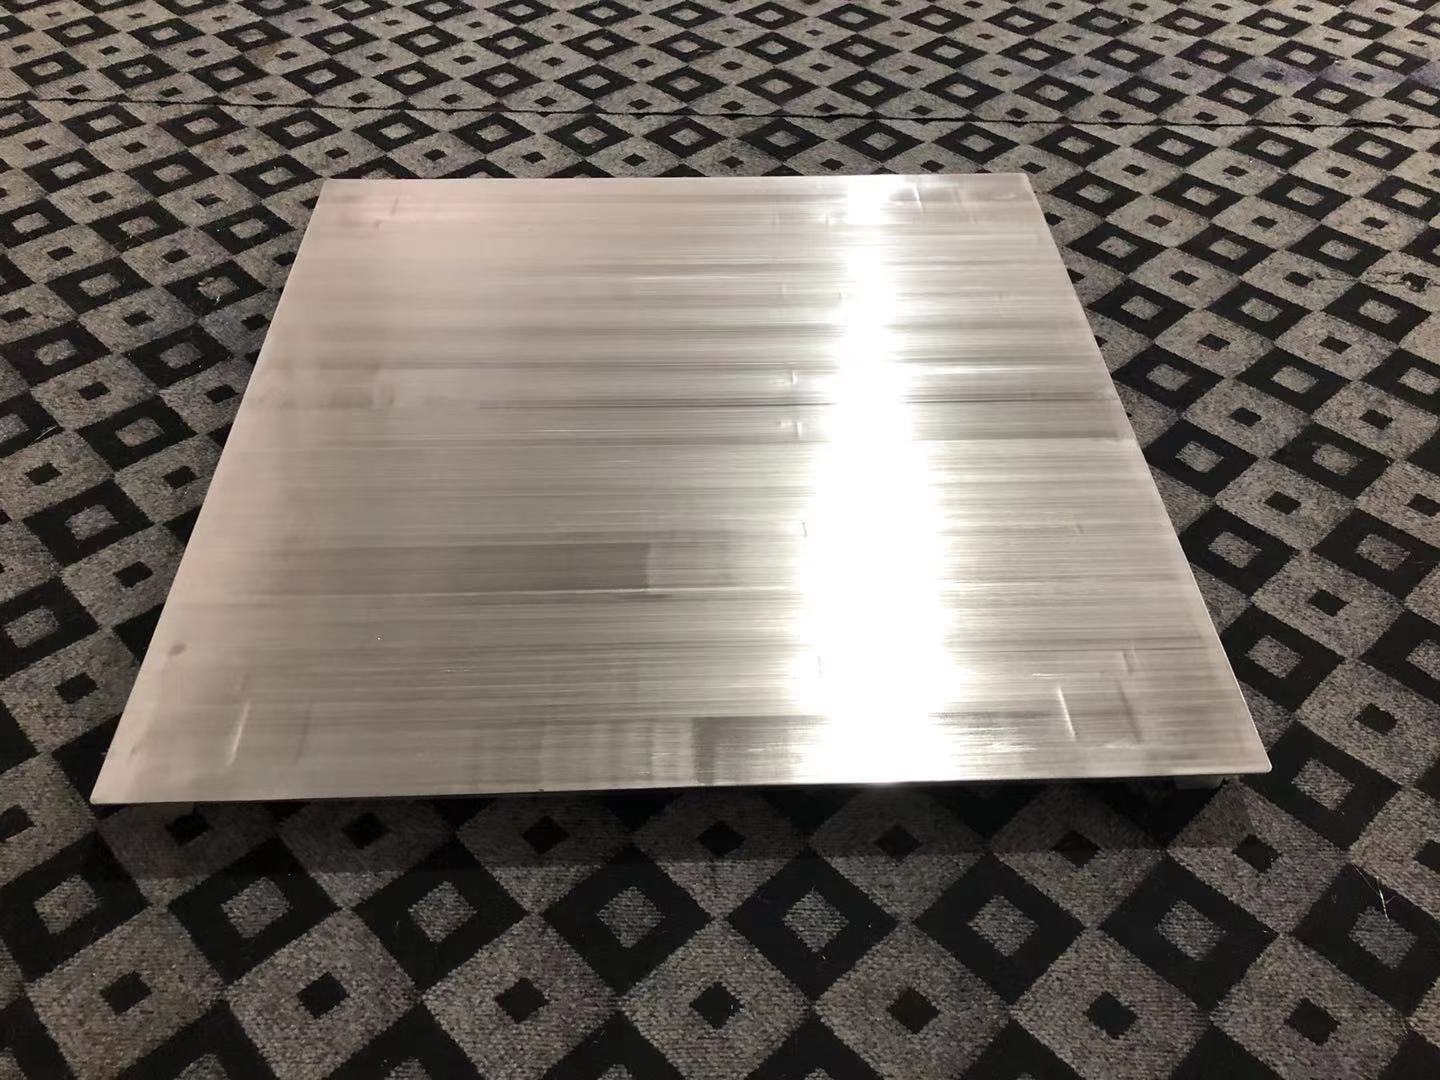 Stainless Steel Single Deck Floor Scale